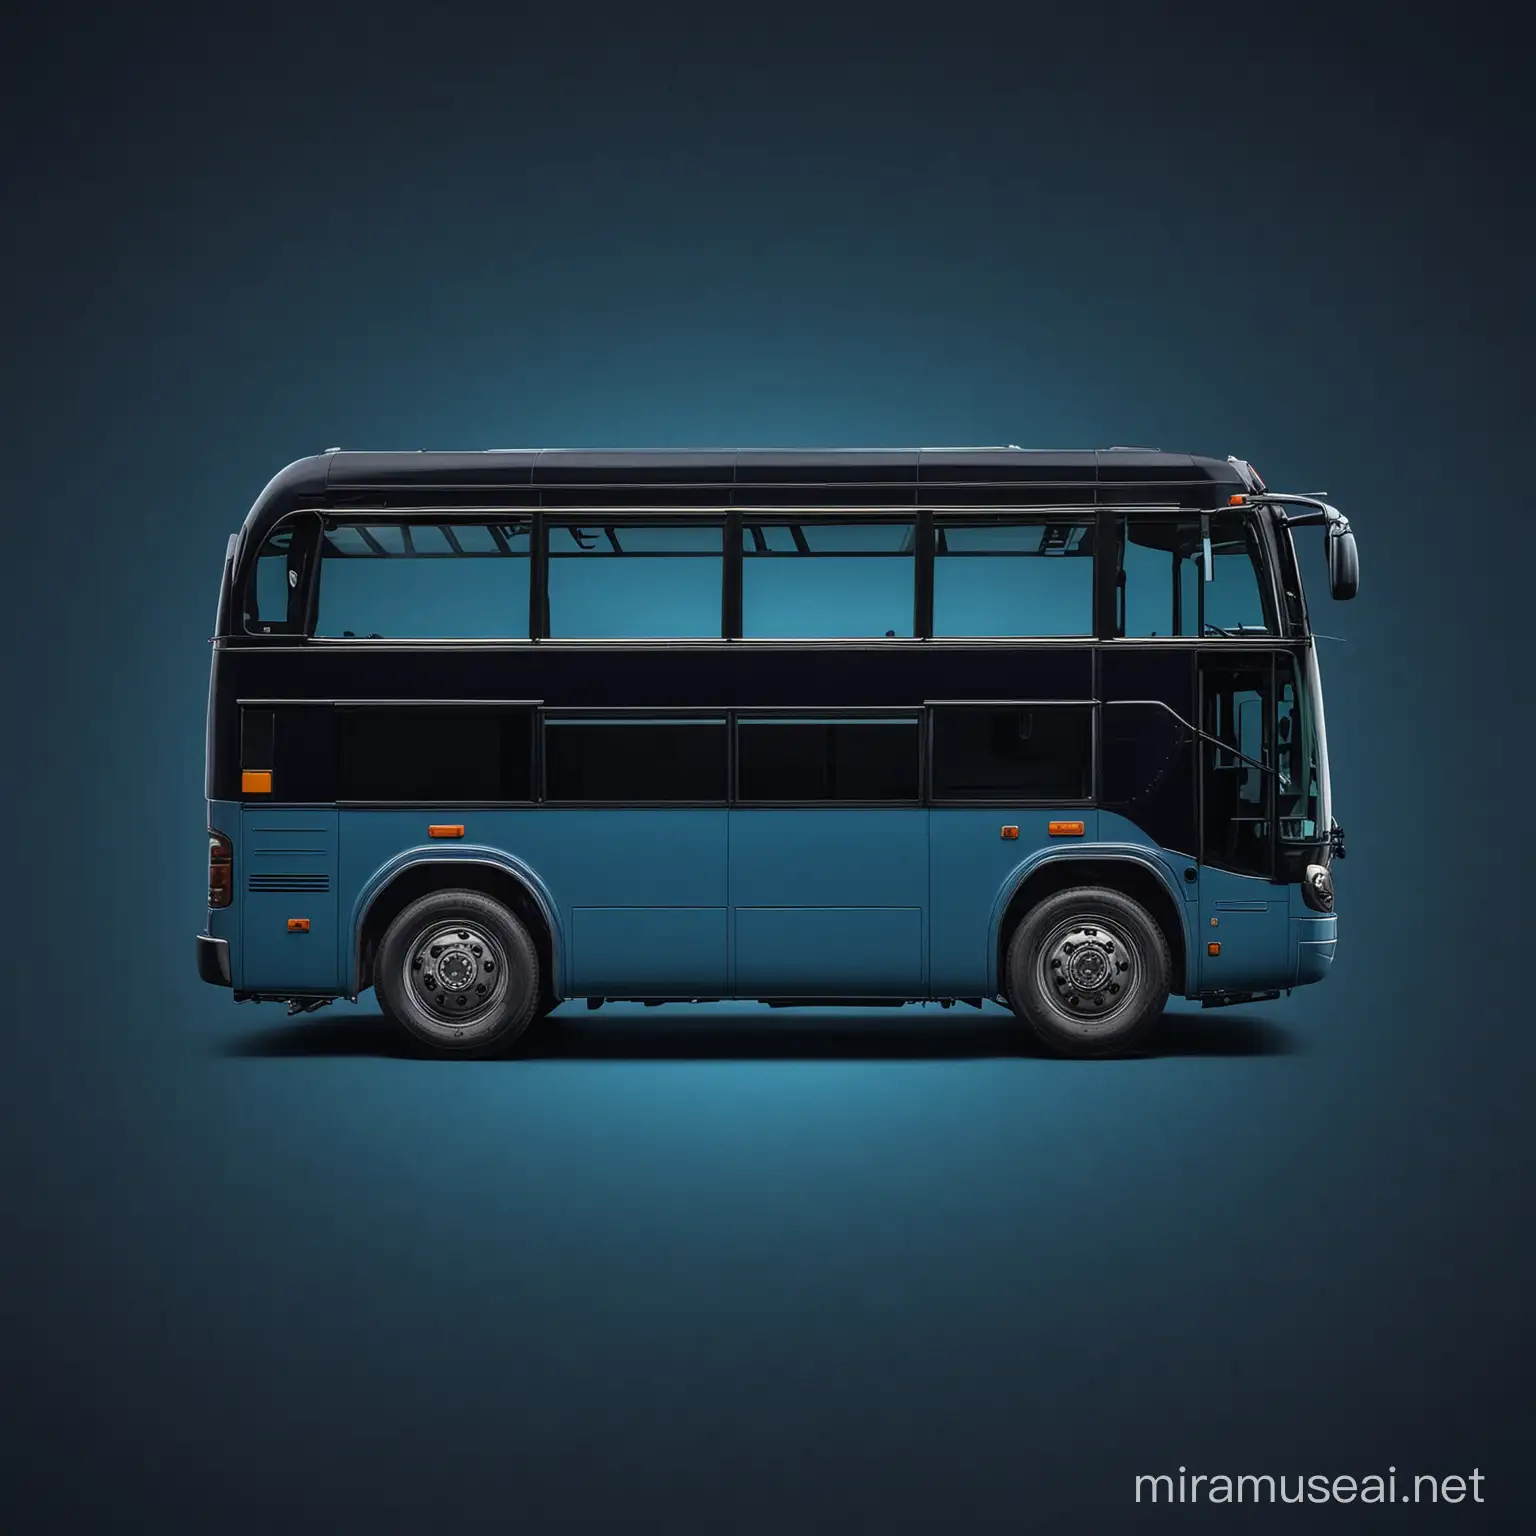 bus iamge with dark blue background
